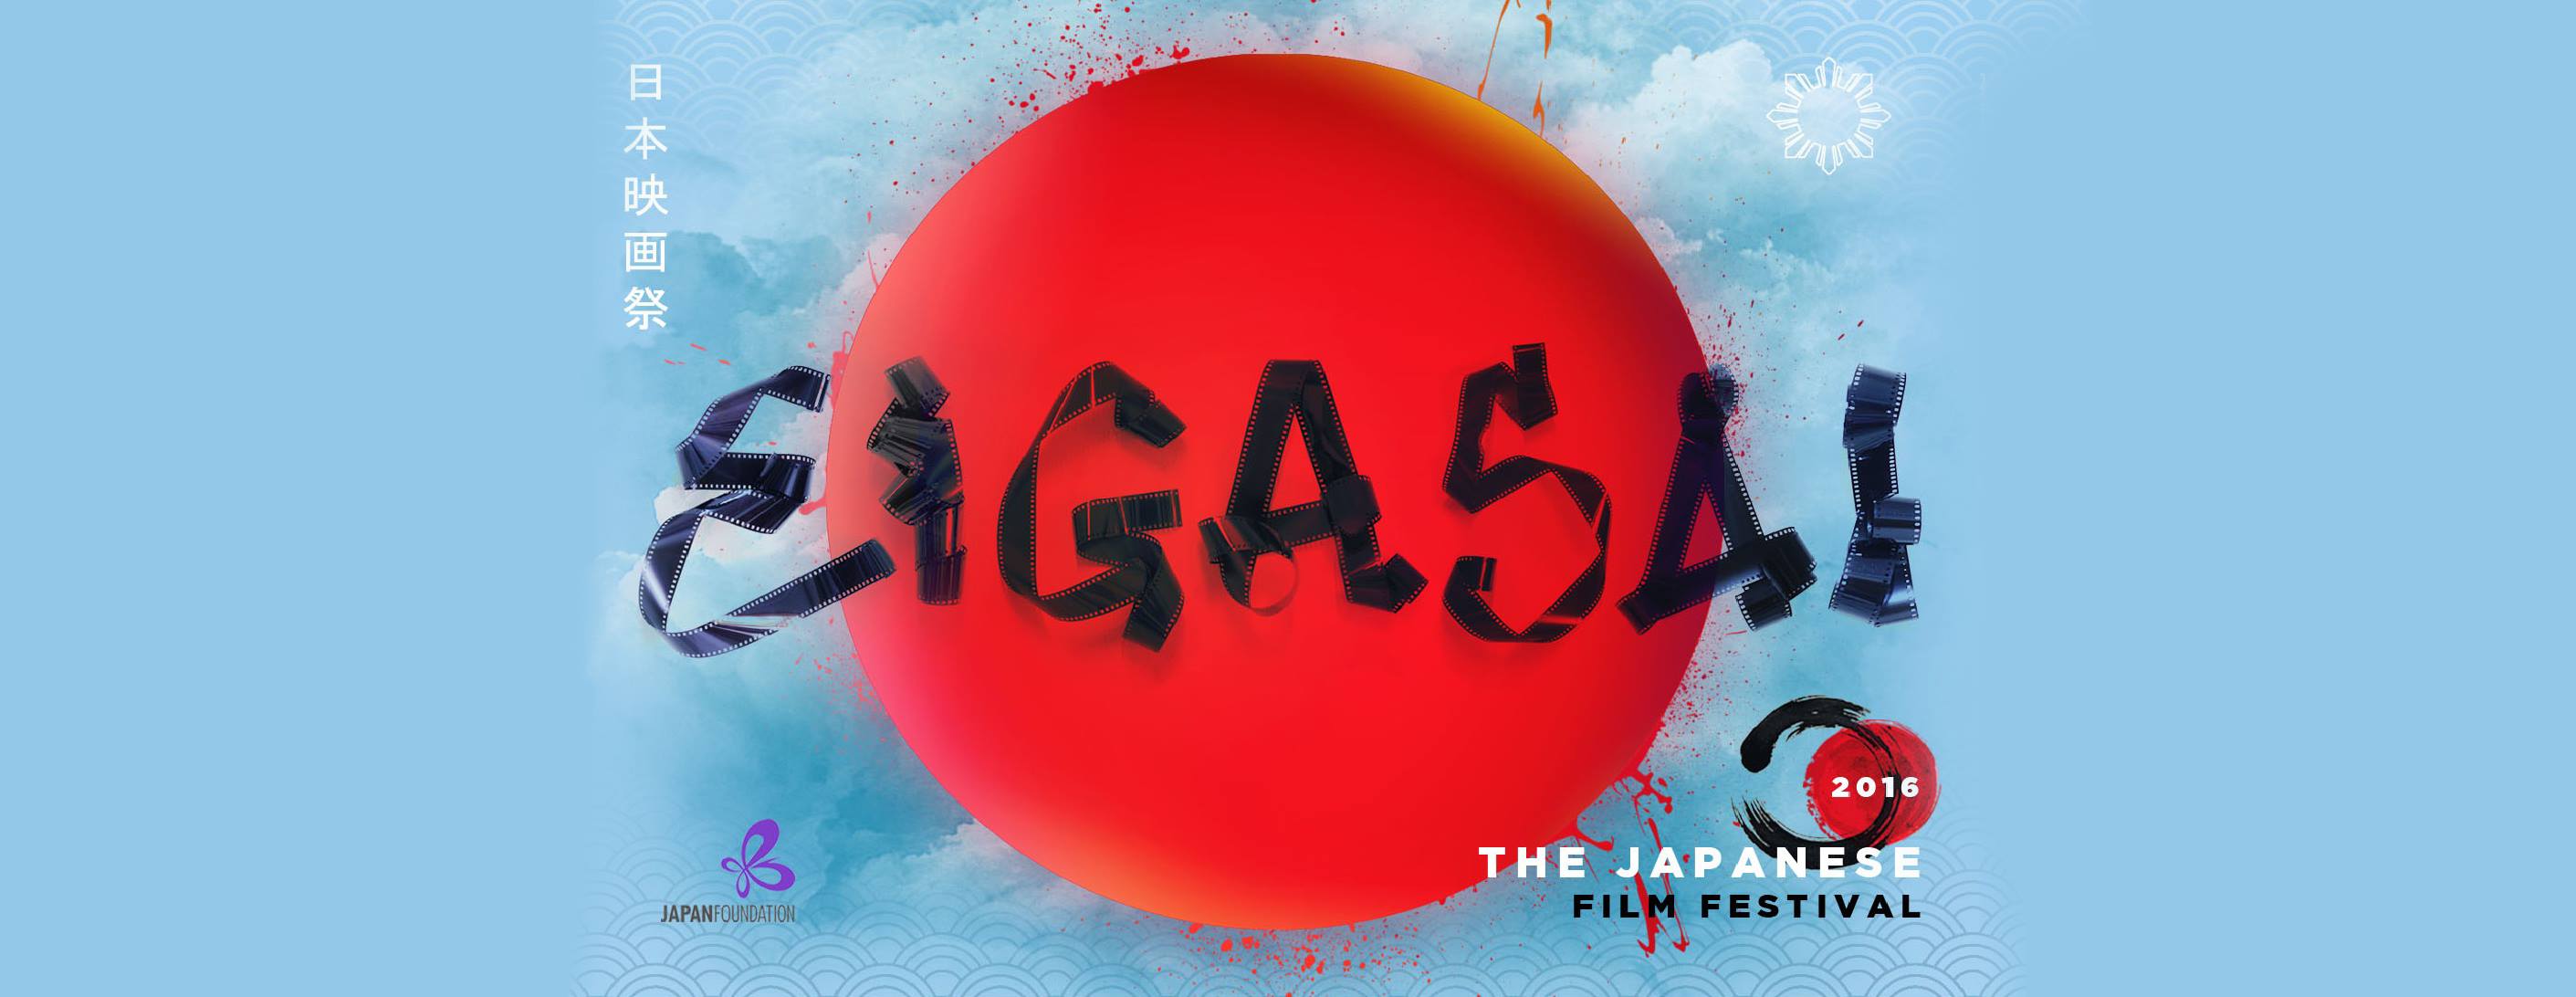 EIGA SAI 2016: The 18th Japanese Film Festival July 7 – July 17 Shang Cineplex Shangri-La Mall, Mandaluyong, Philippines Free admission! The main leg of EIGA SAI 2016: The 18th Japanese Film Festival will run from July 7 to 17 at Shang Cineplex, Shangri-La Plaza Mall, EDSA.